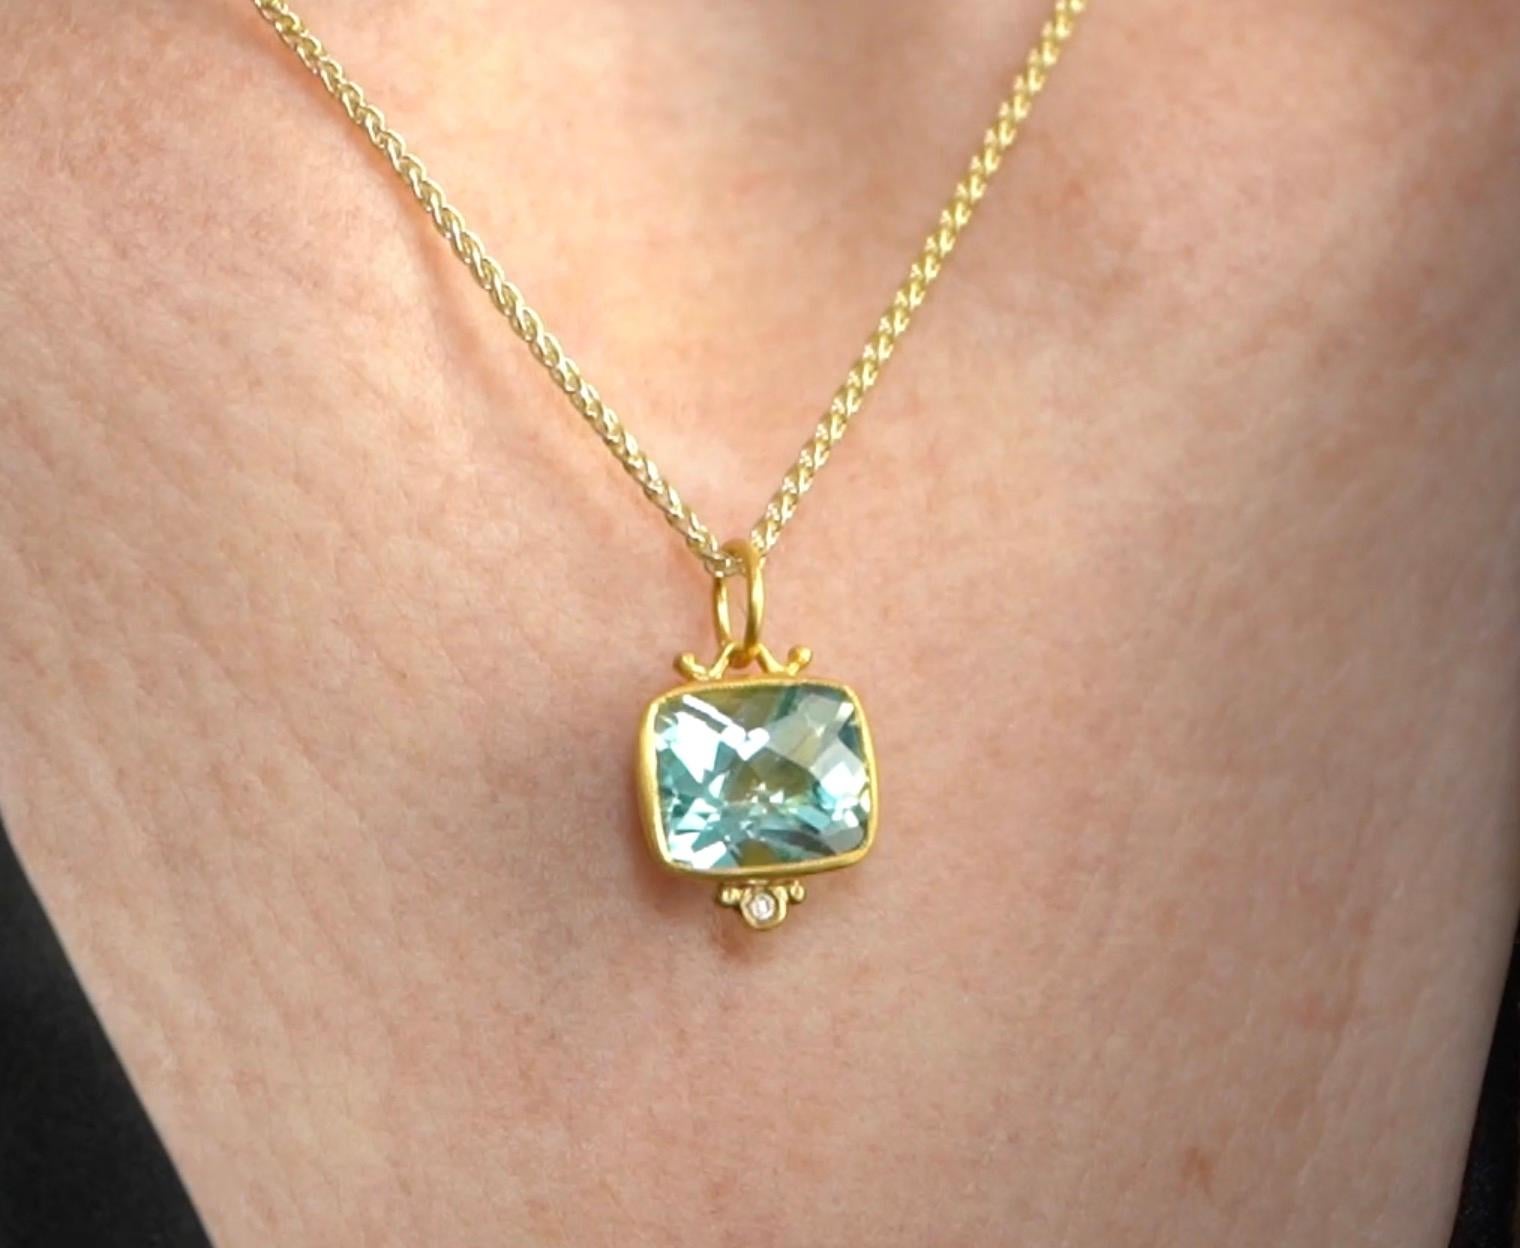 Contemporain Pendentif en topaze bleue brillante en damier facetté, pendentif pour collier en or massif 24K en vente